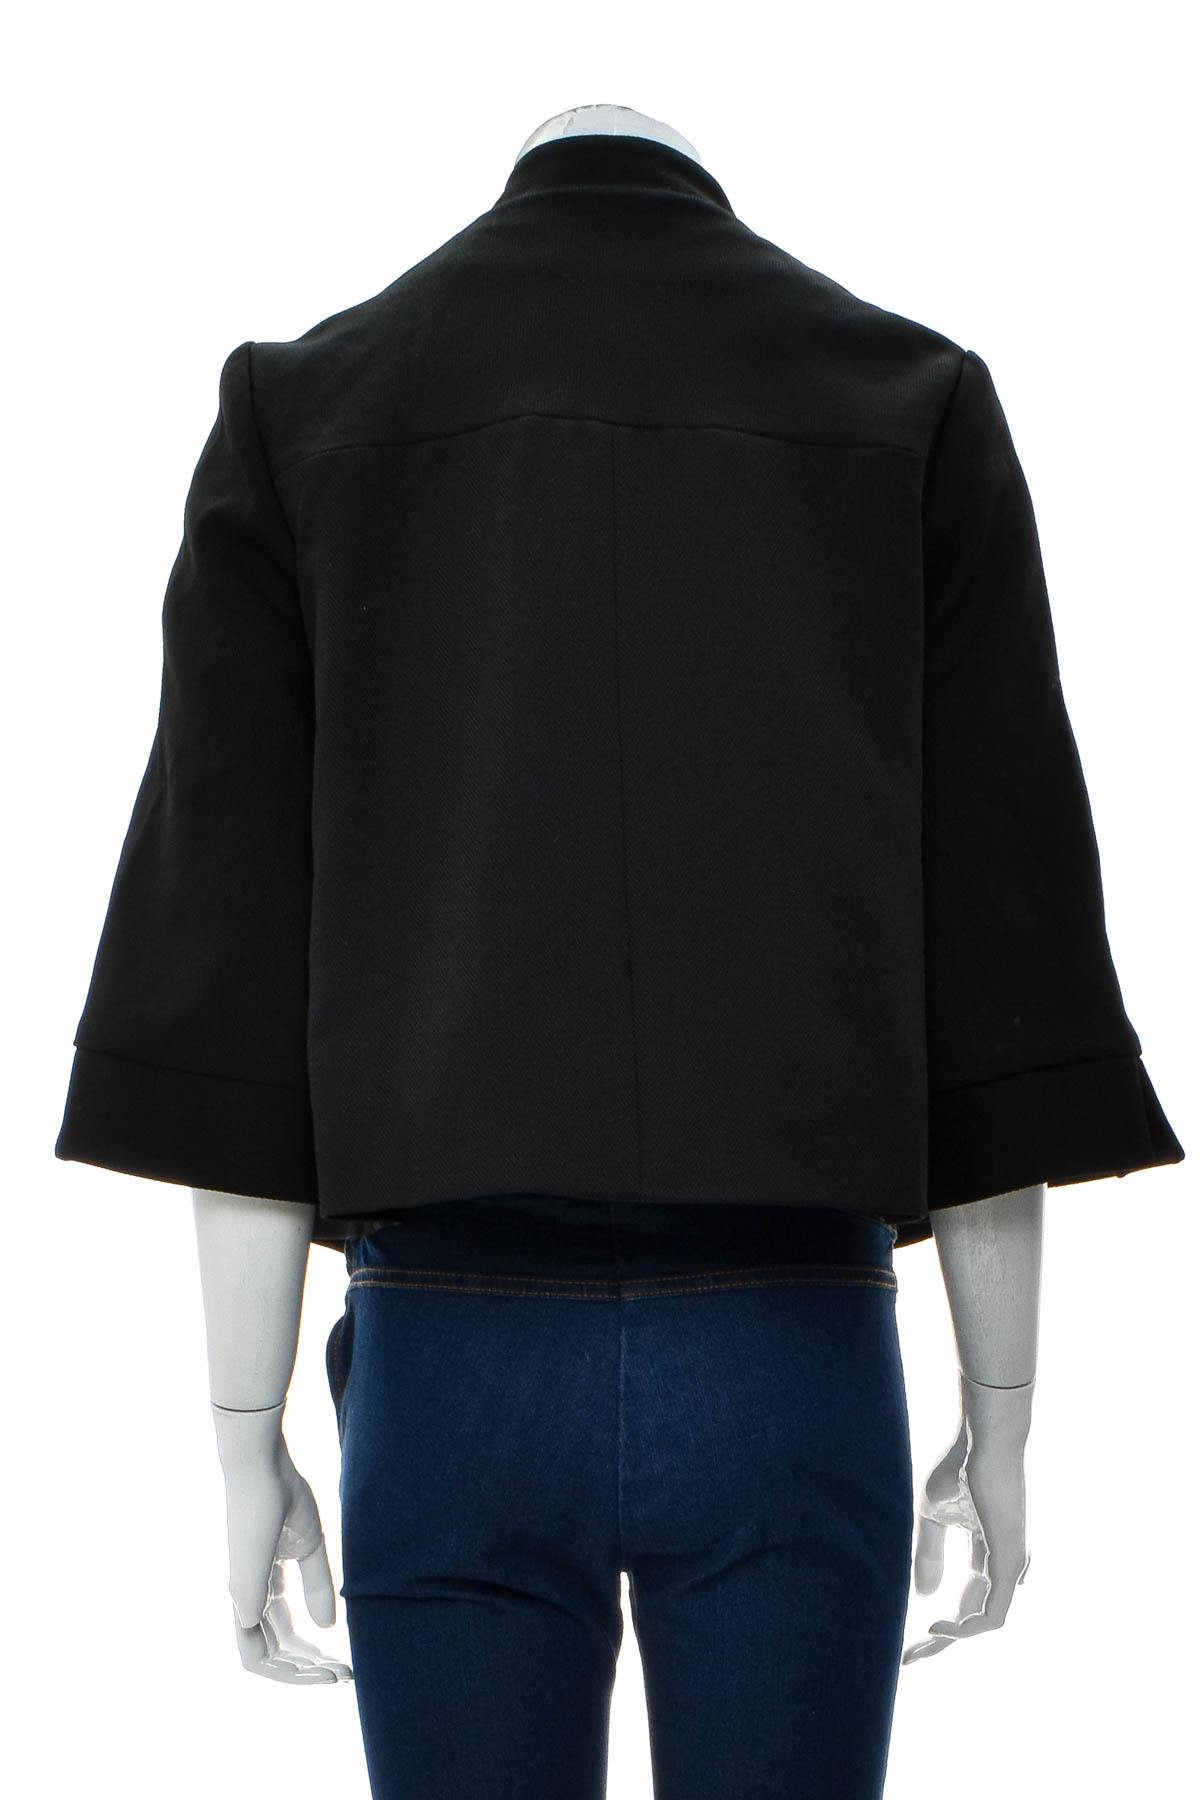 Women's coat - LA REDOUTE - 1